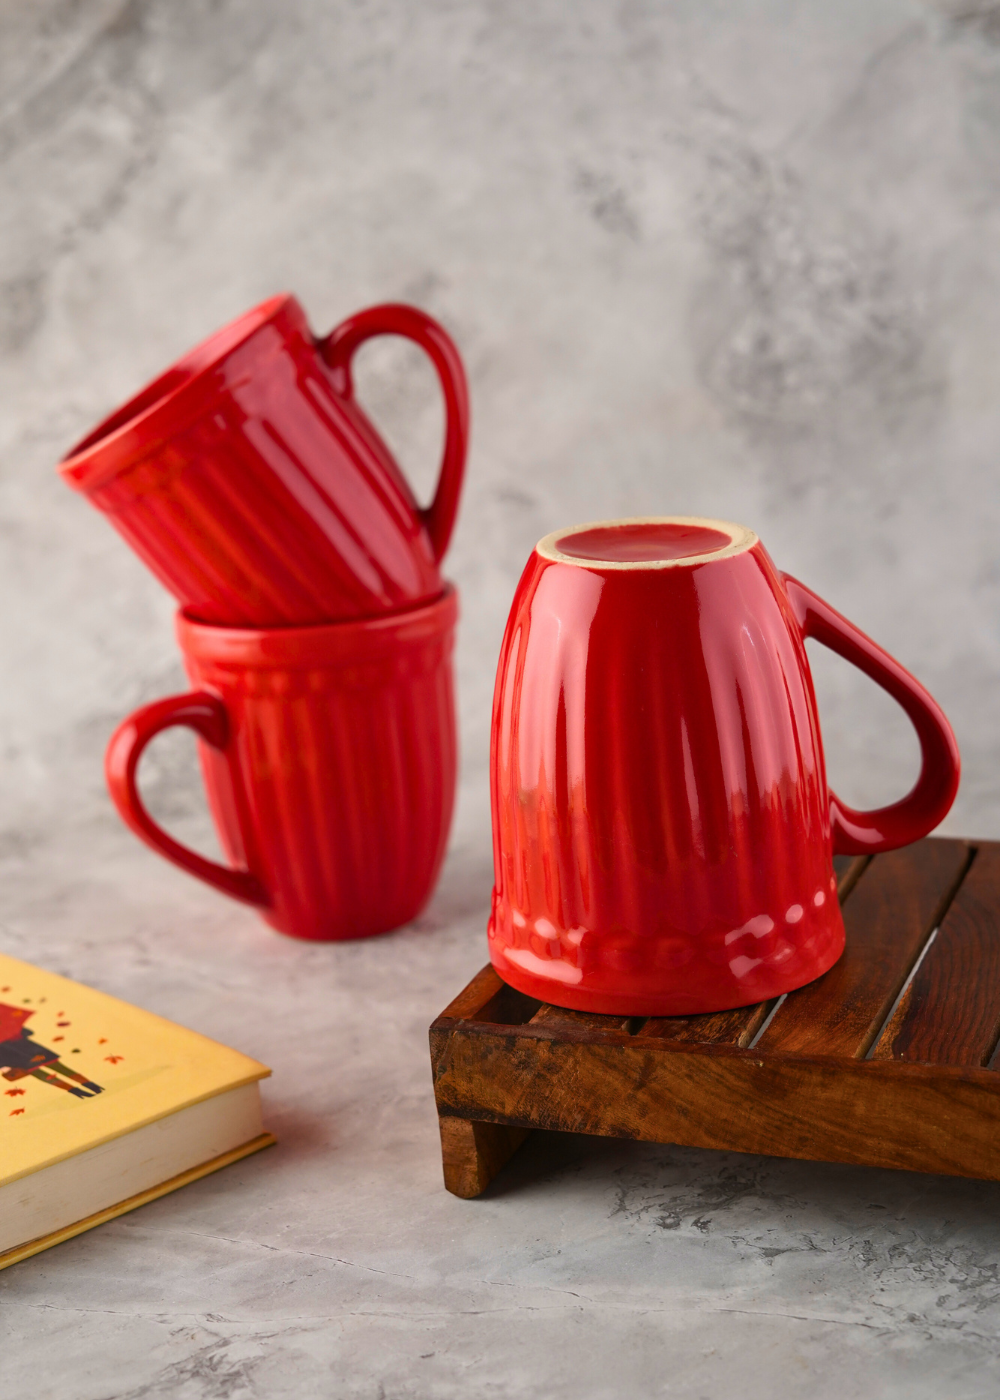 red vintage mug with ceramic material